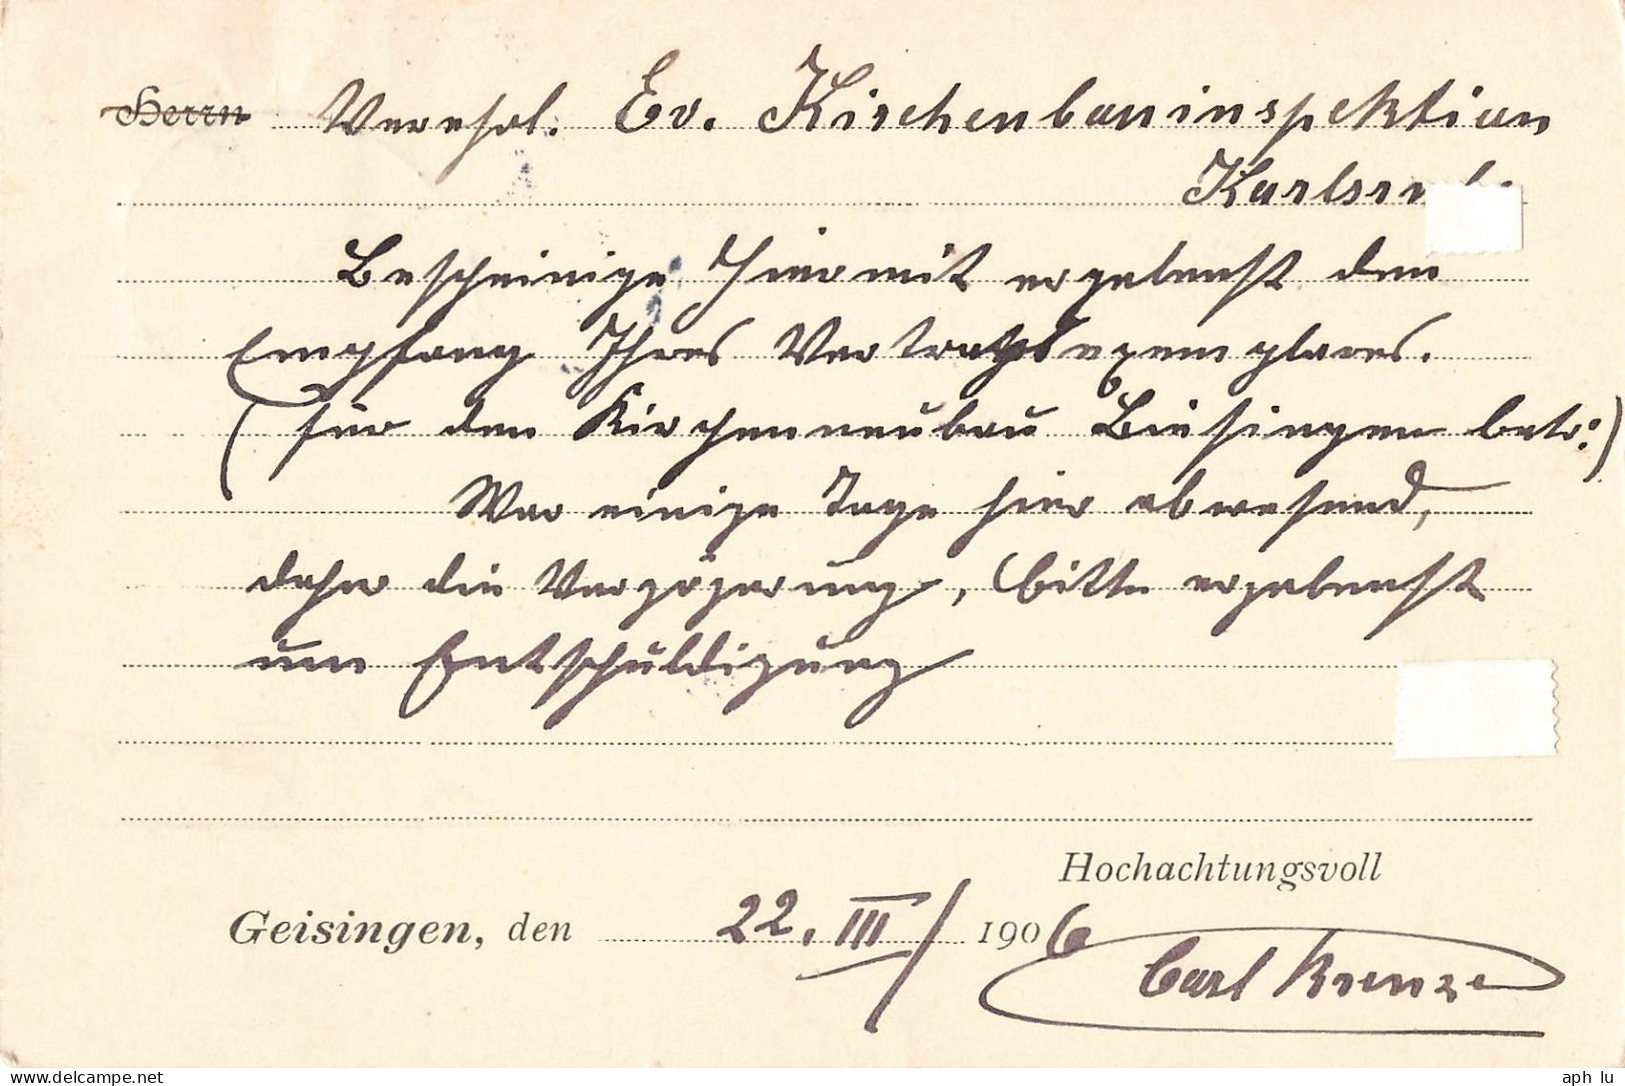 Bahnpost (Ambulant; R.P.O./T.P.O.) Konstanz-Offenburg (ZA2490) - Briefe U. Dokumente